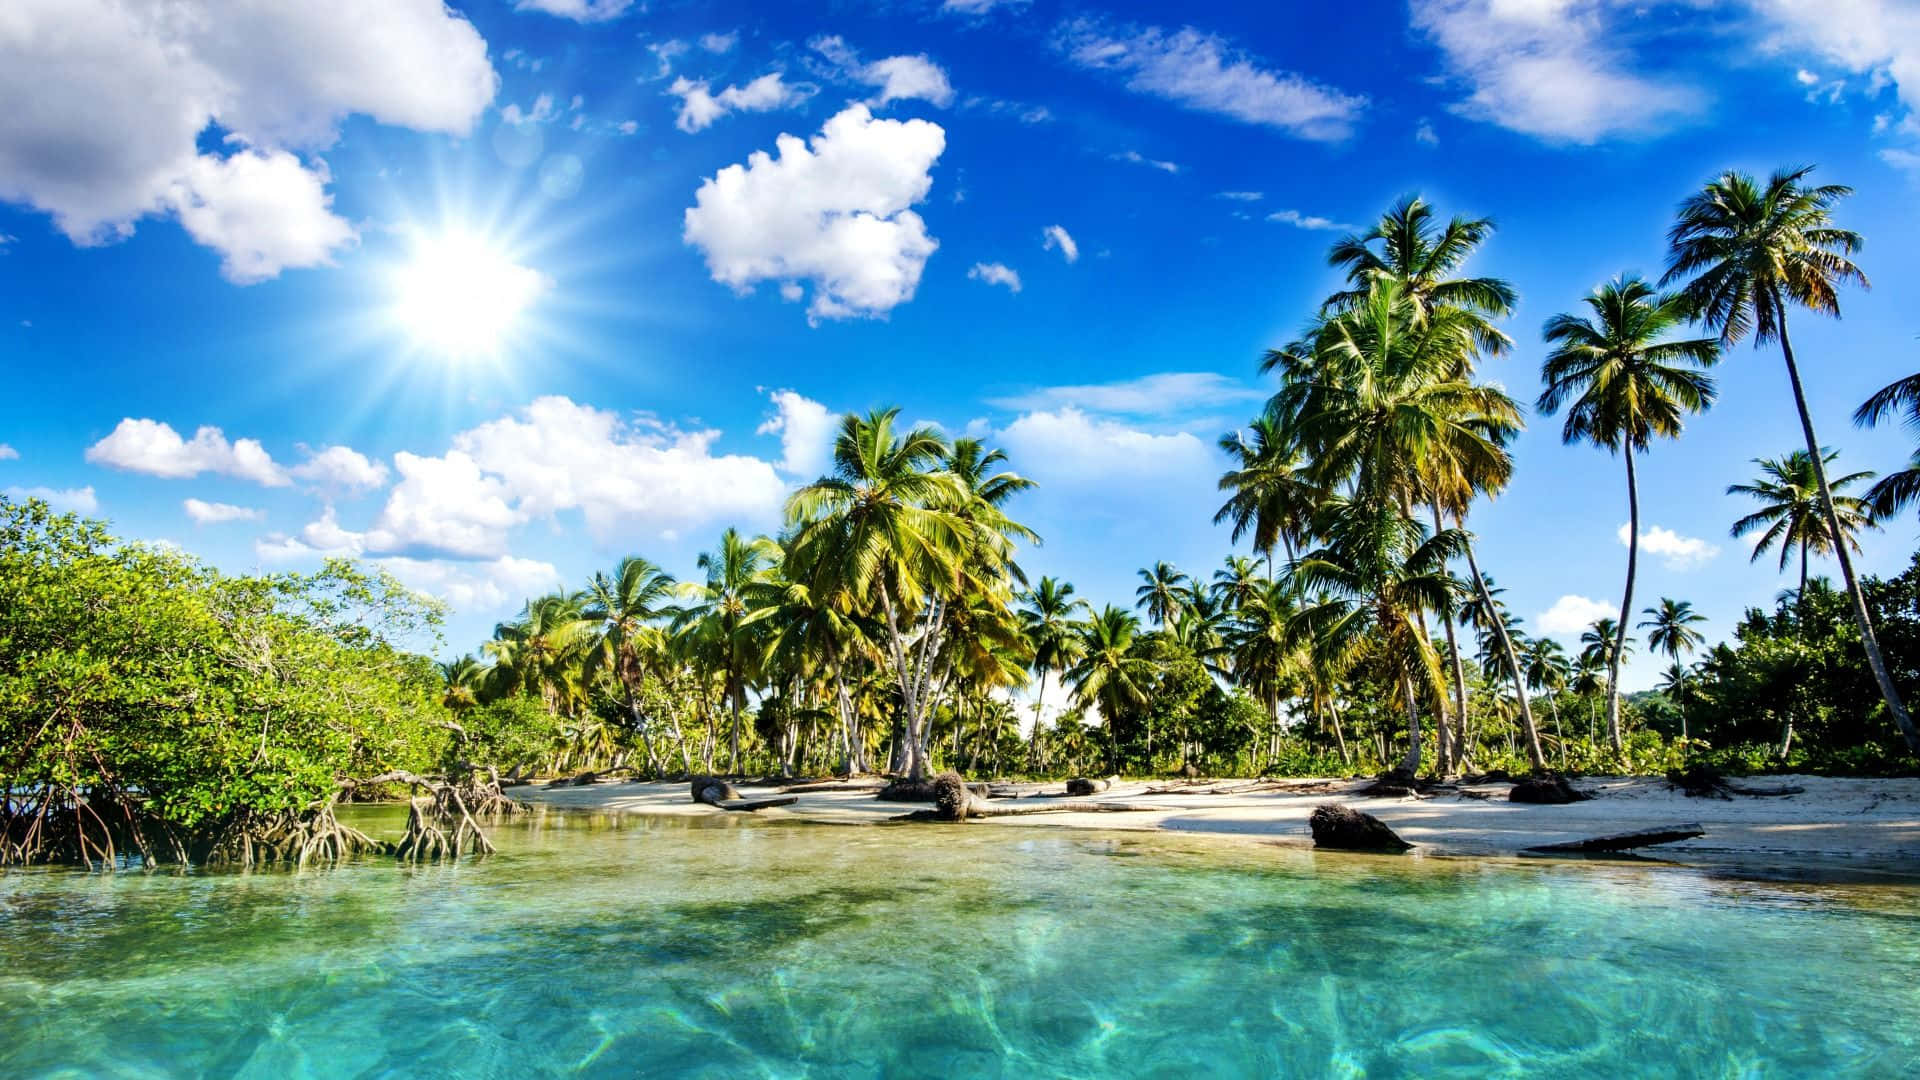 Mangroves Coconut Beach Themed Background